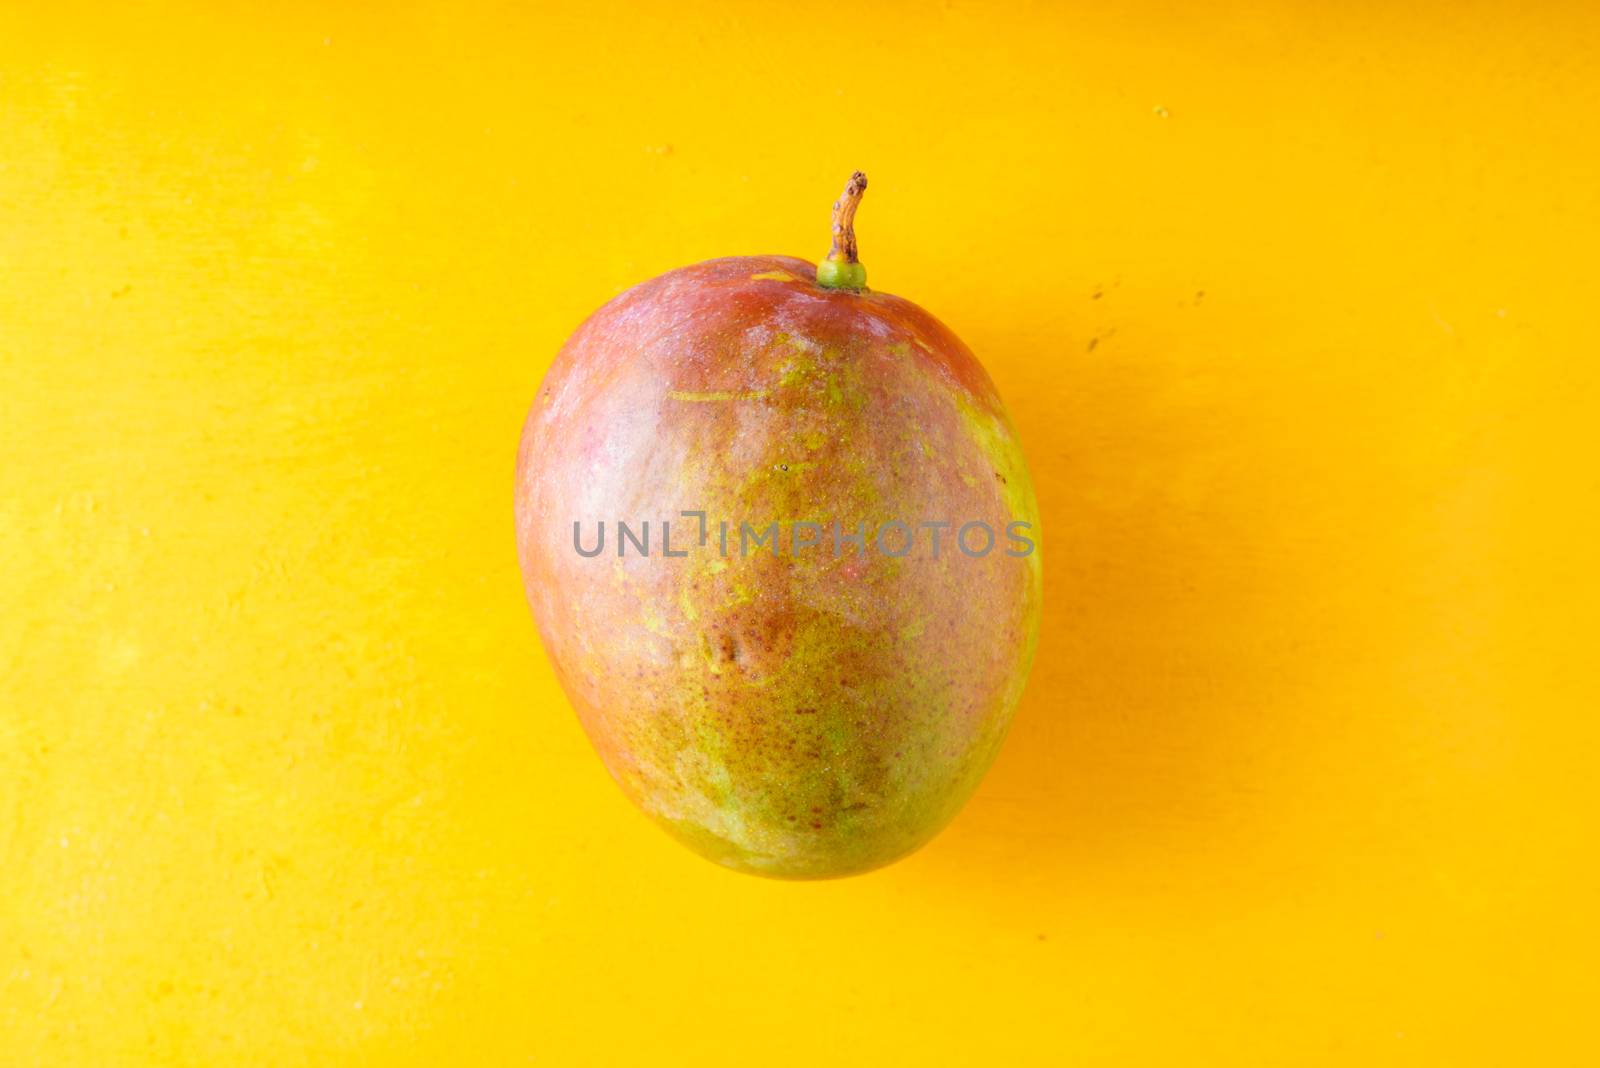 Mango on a yellow table horizontal